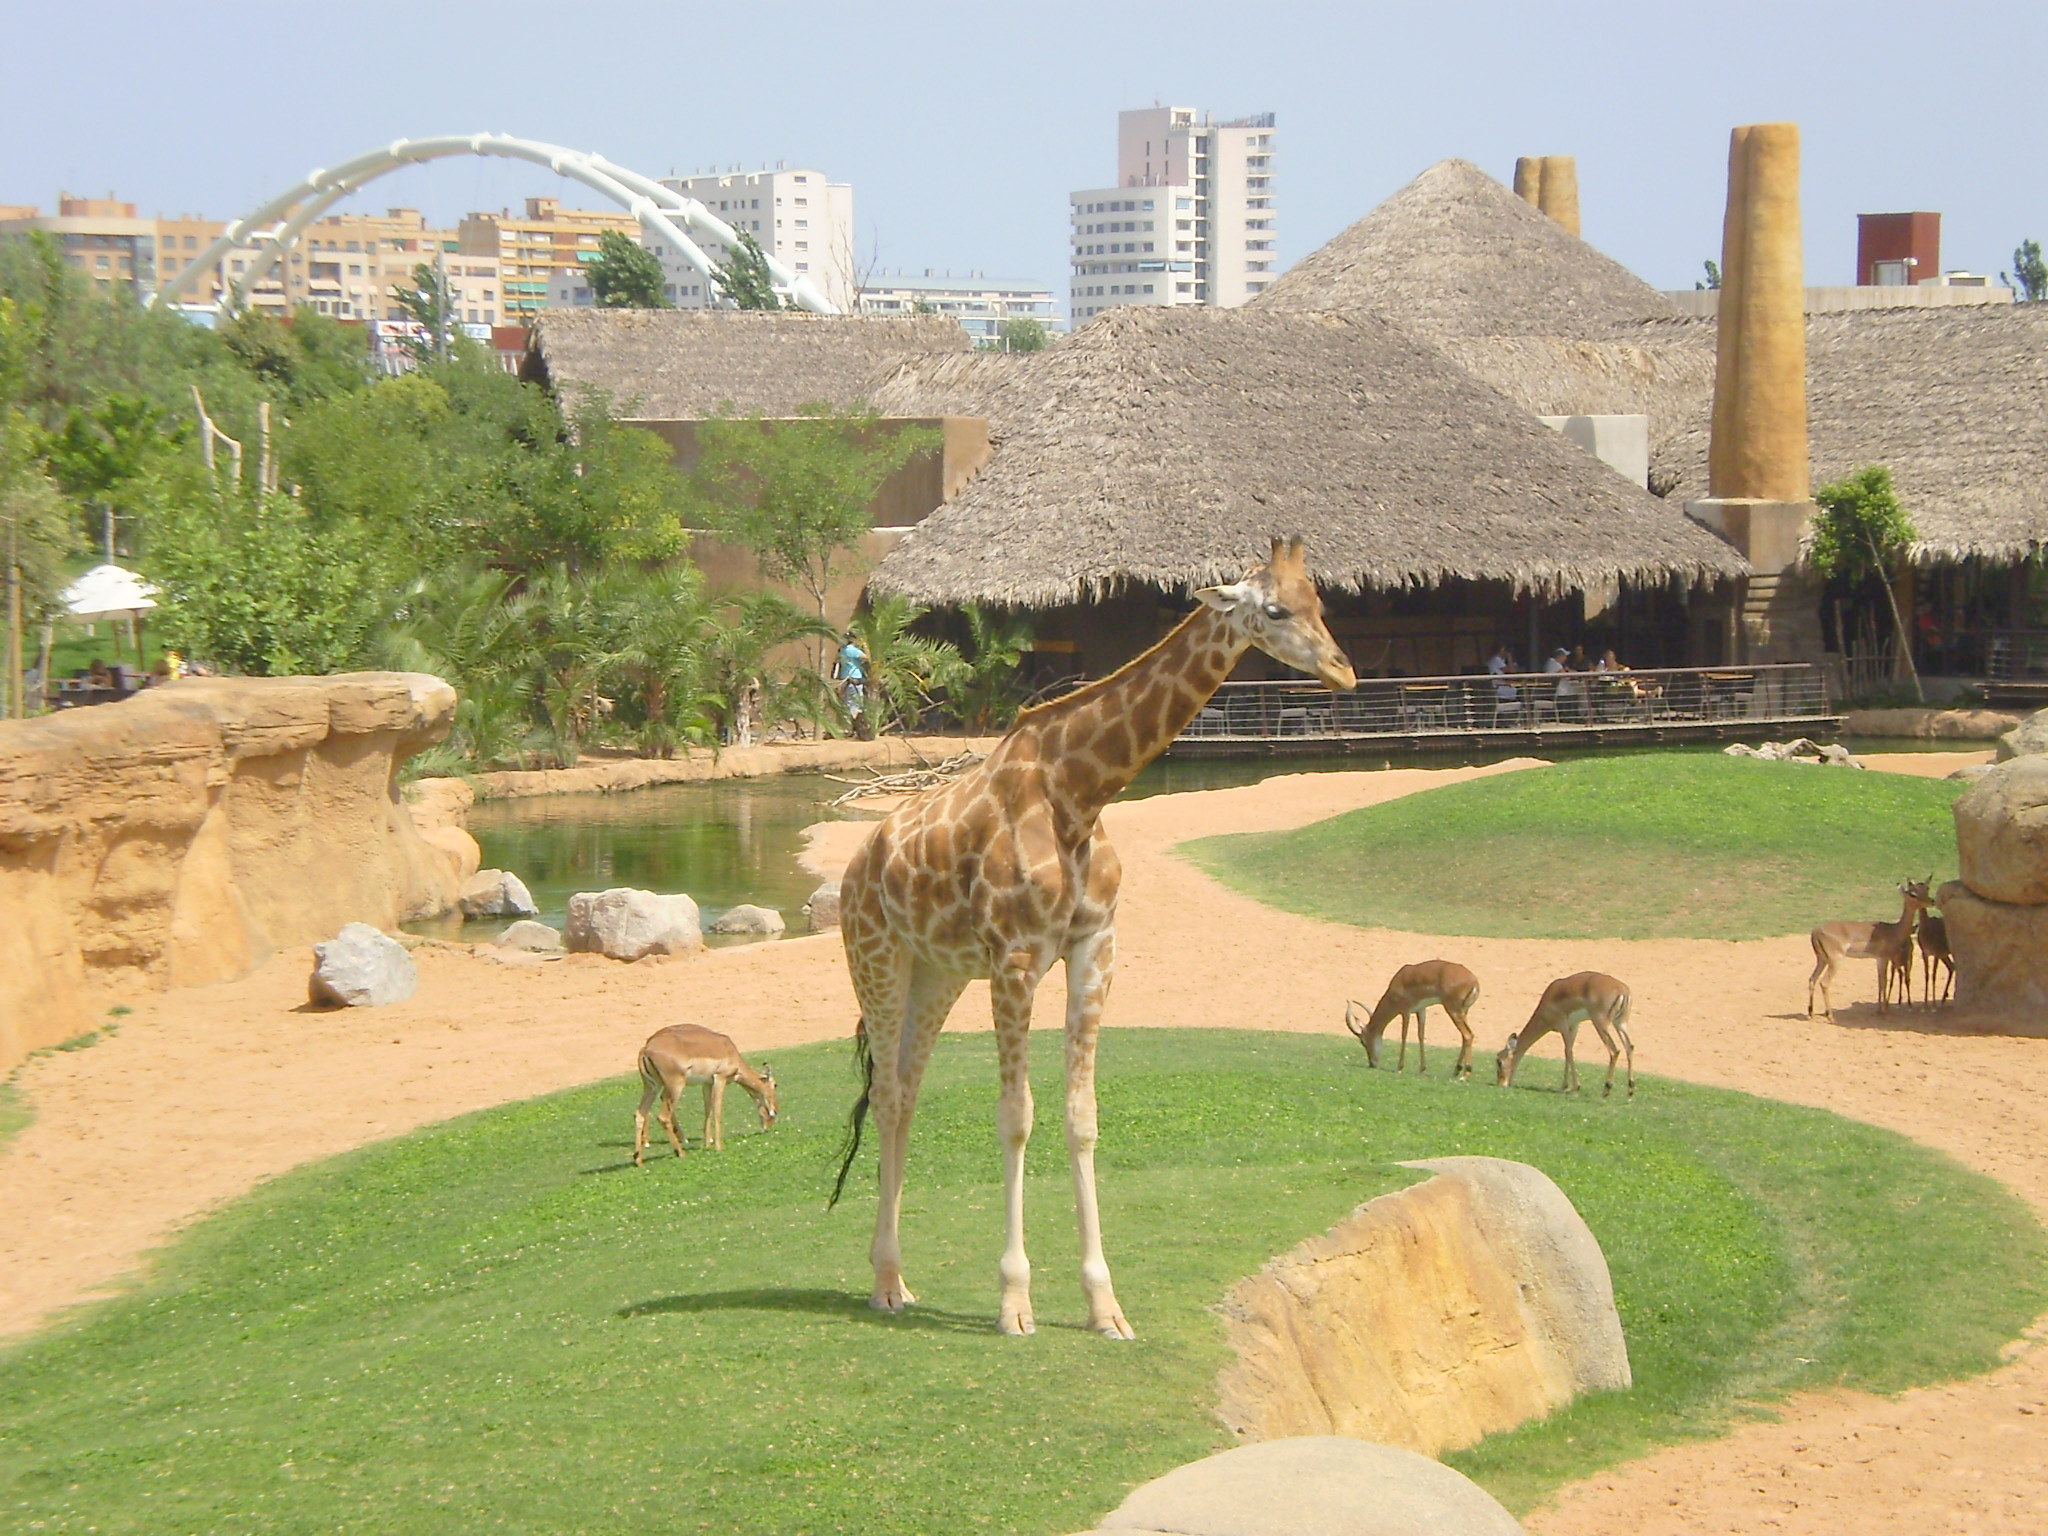 Giraffes at Valencia's Bioparc